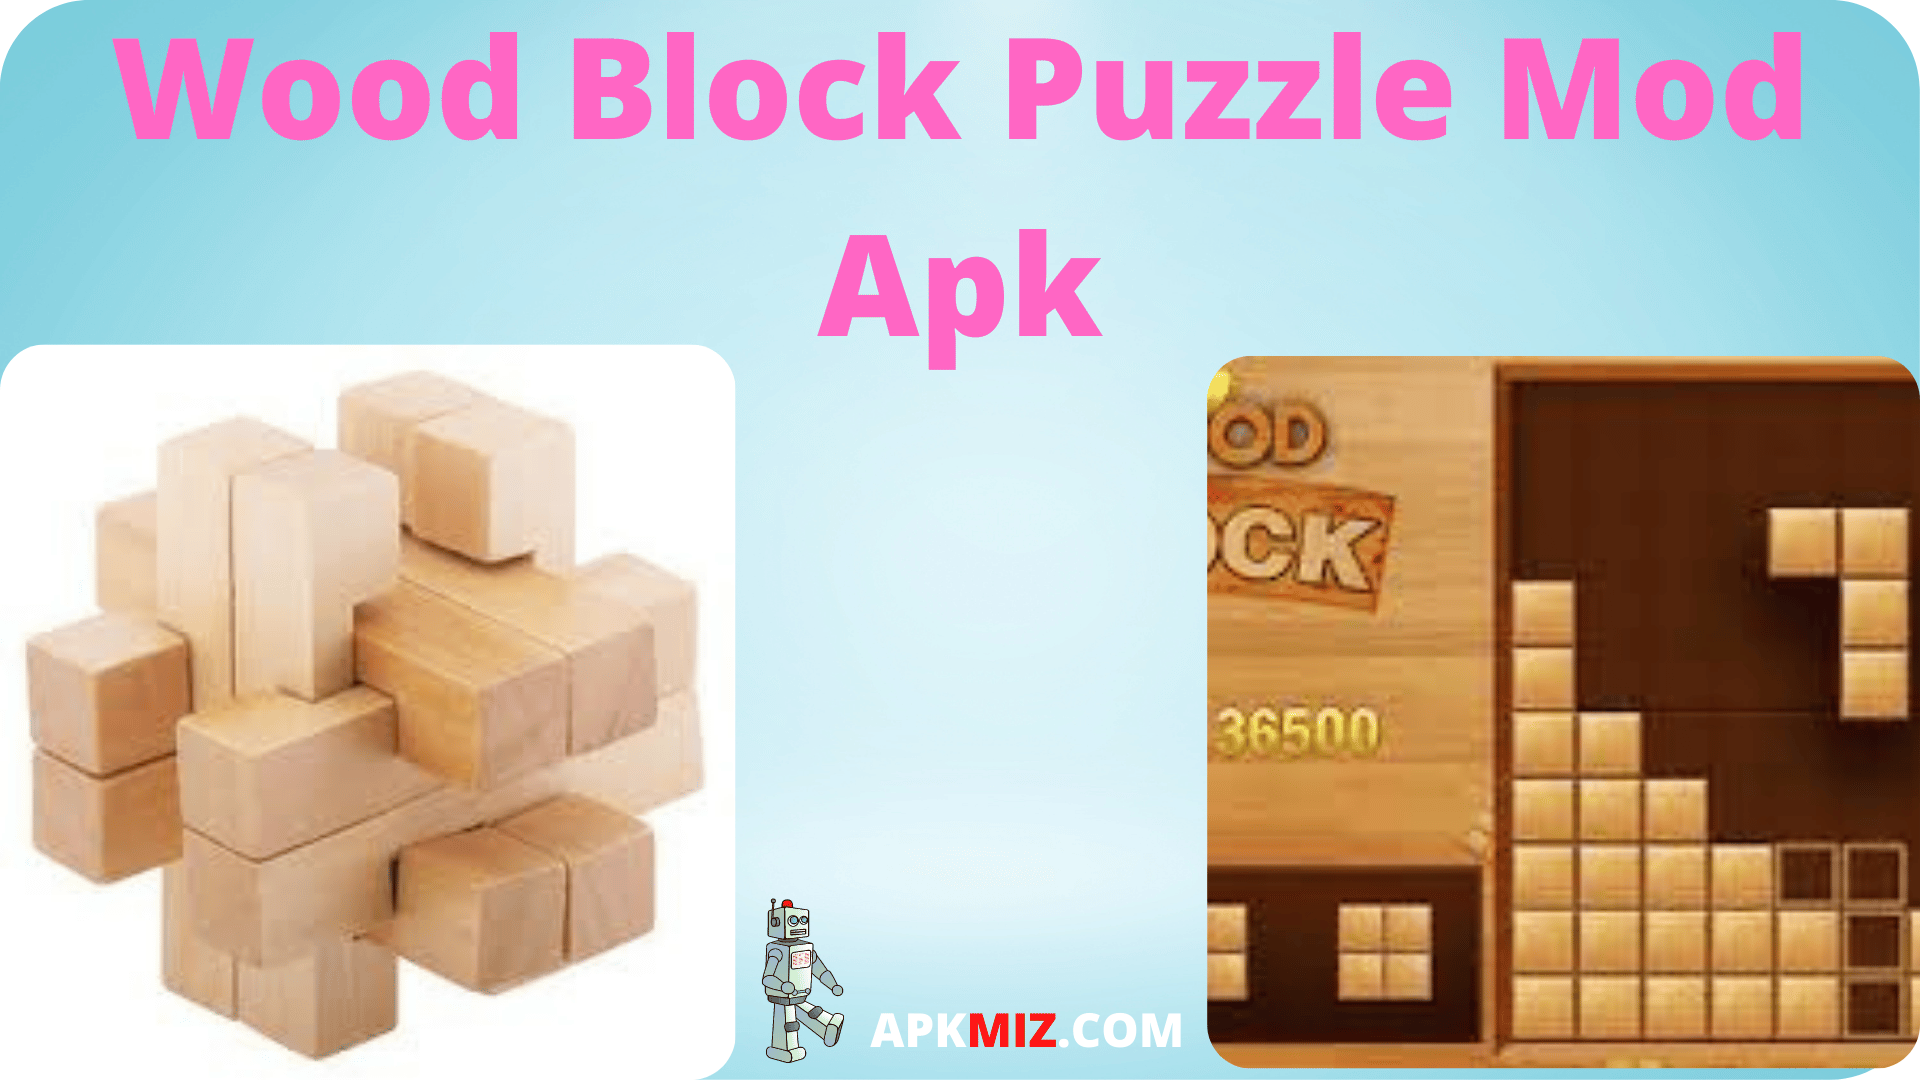 Wood Block Puzzle Mod Apk